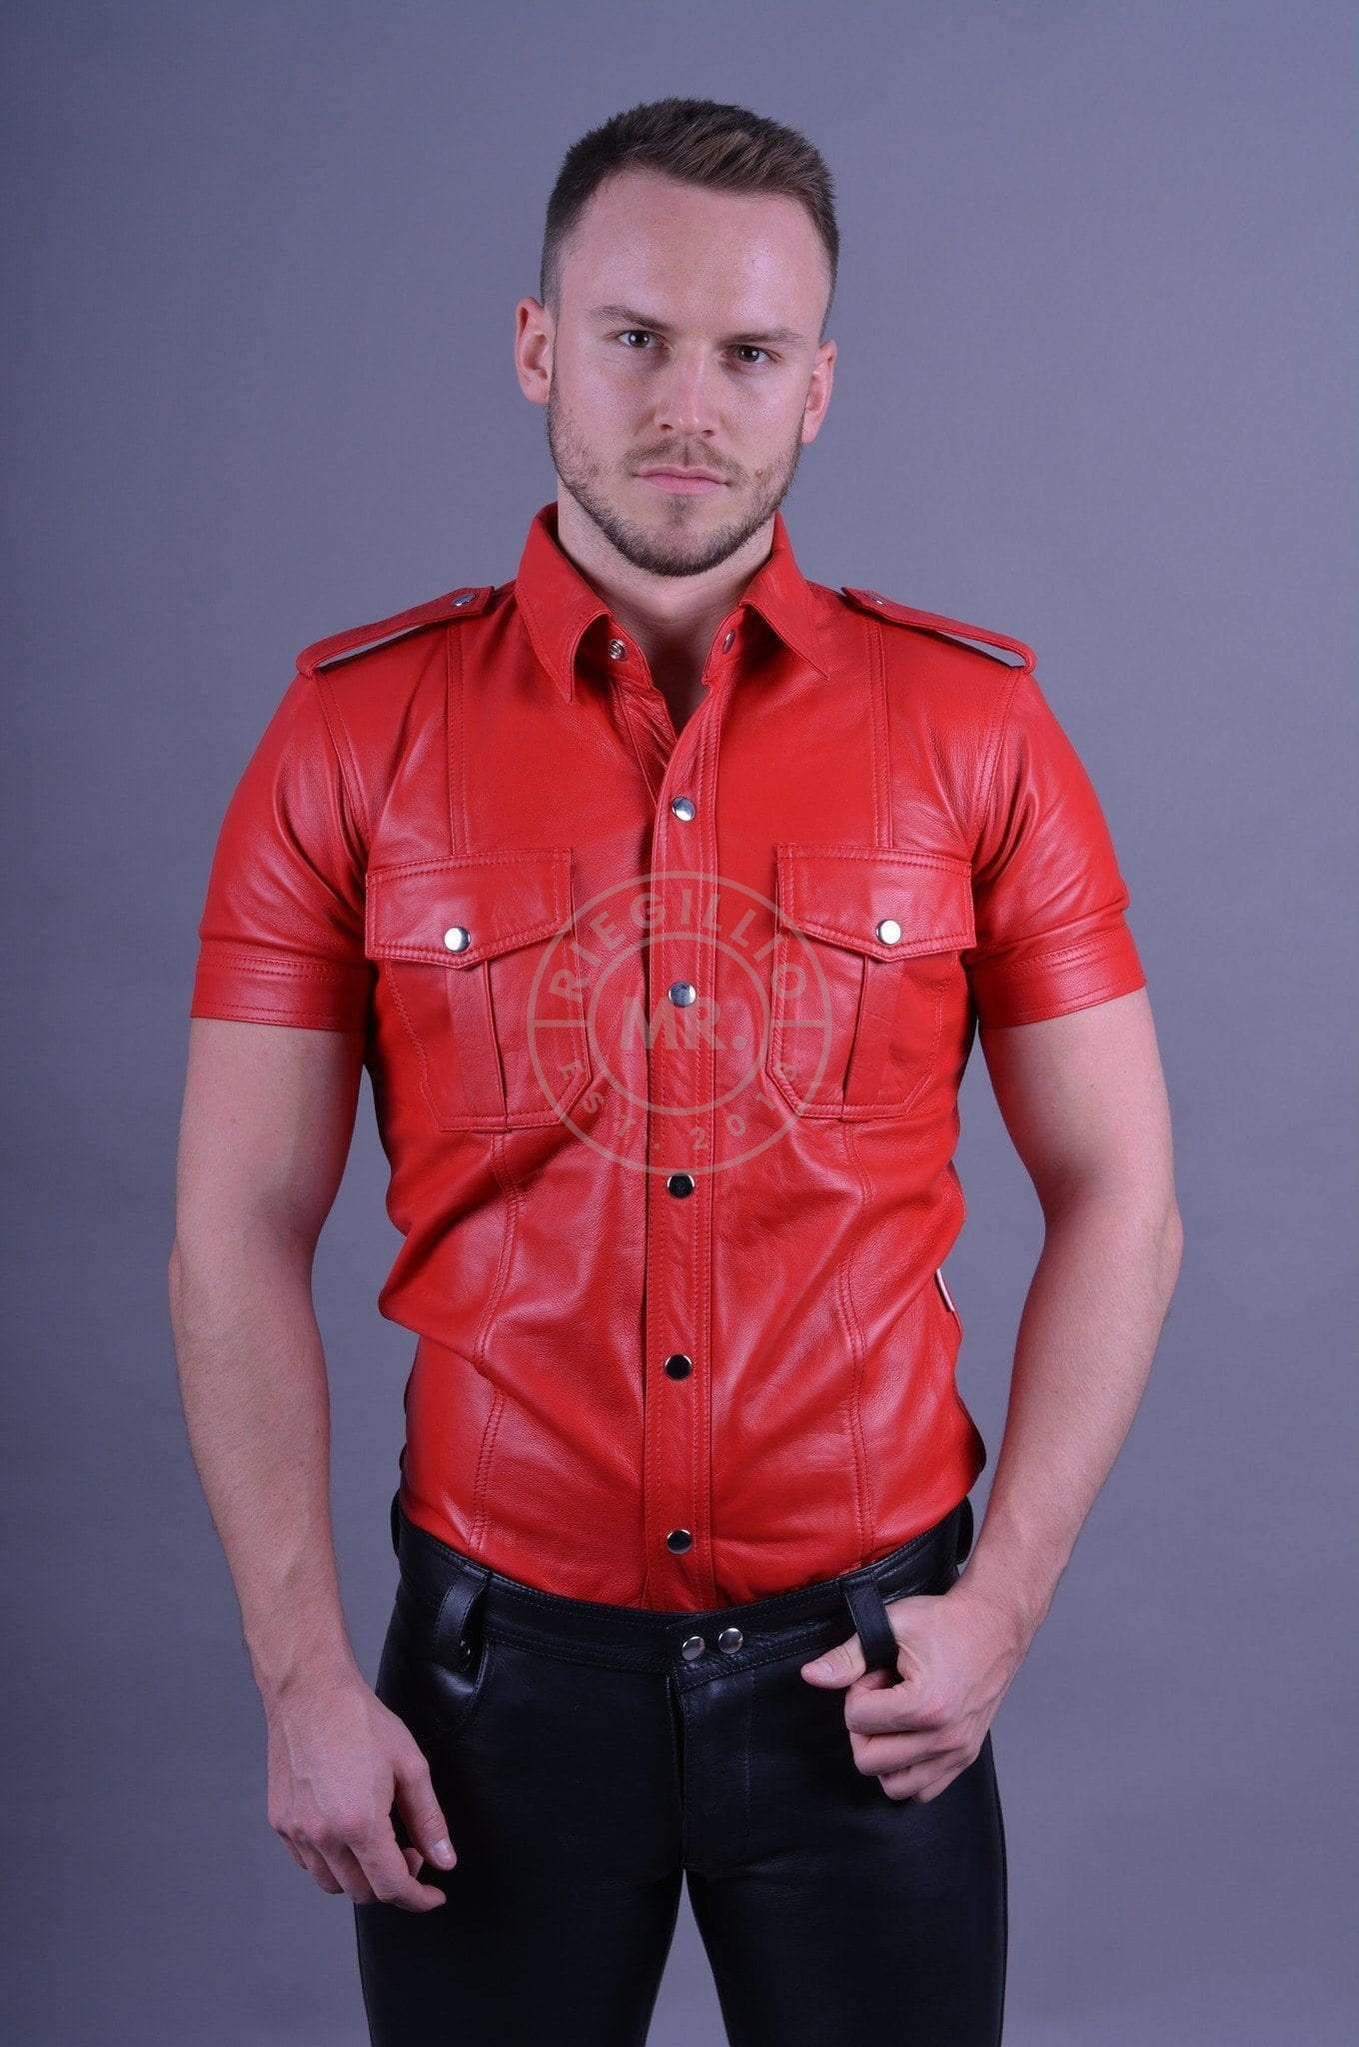 Red Leather Shirt at MR. Riegillio